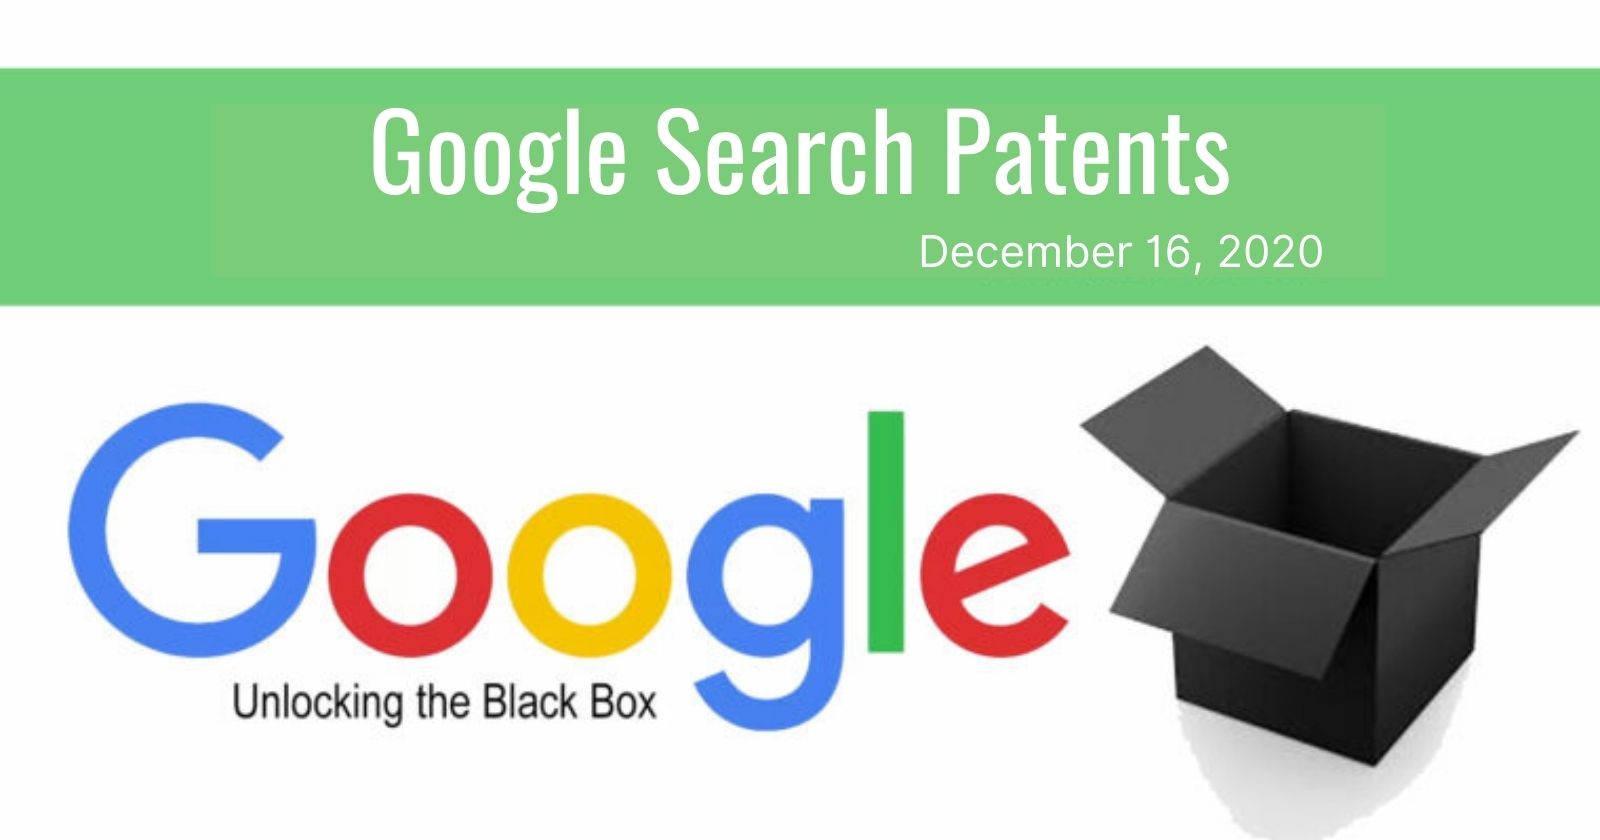 Google Search Patent Update